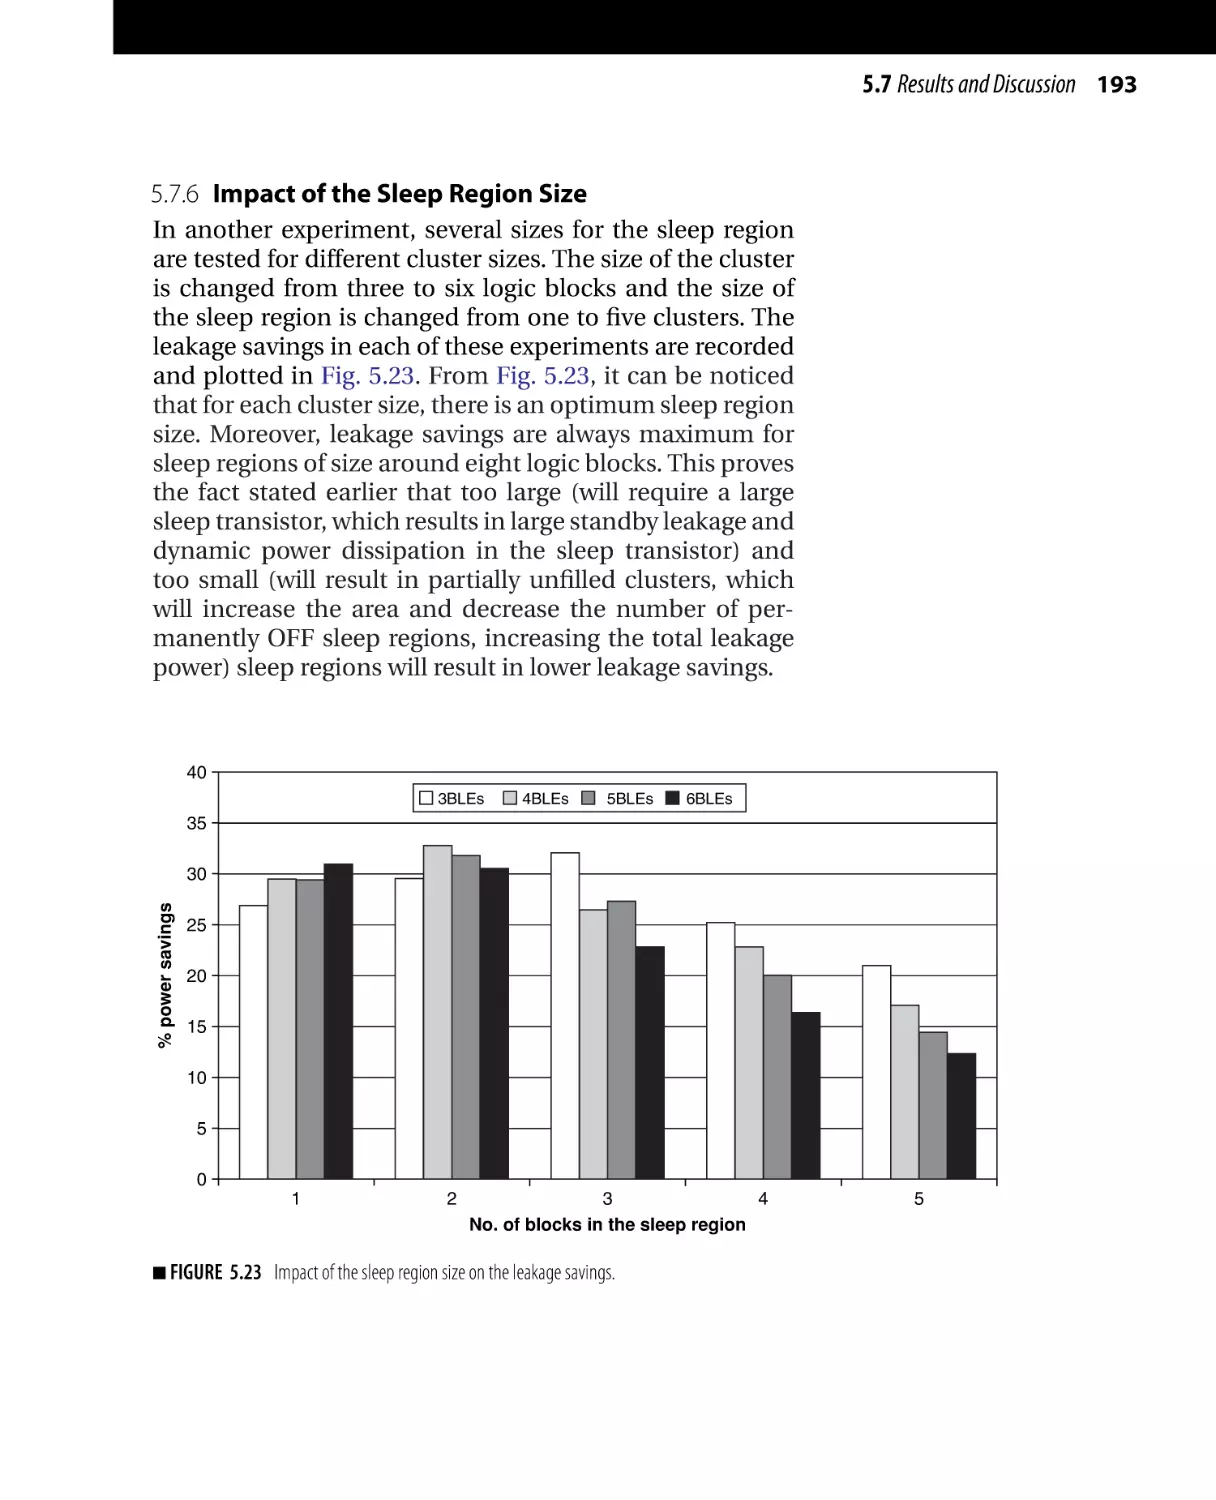 Impact of the Sleep Region Size